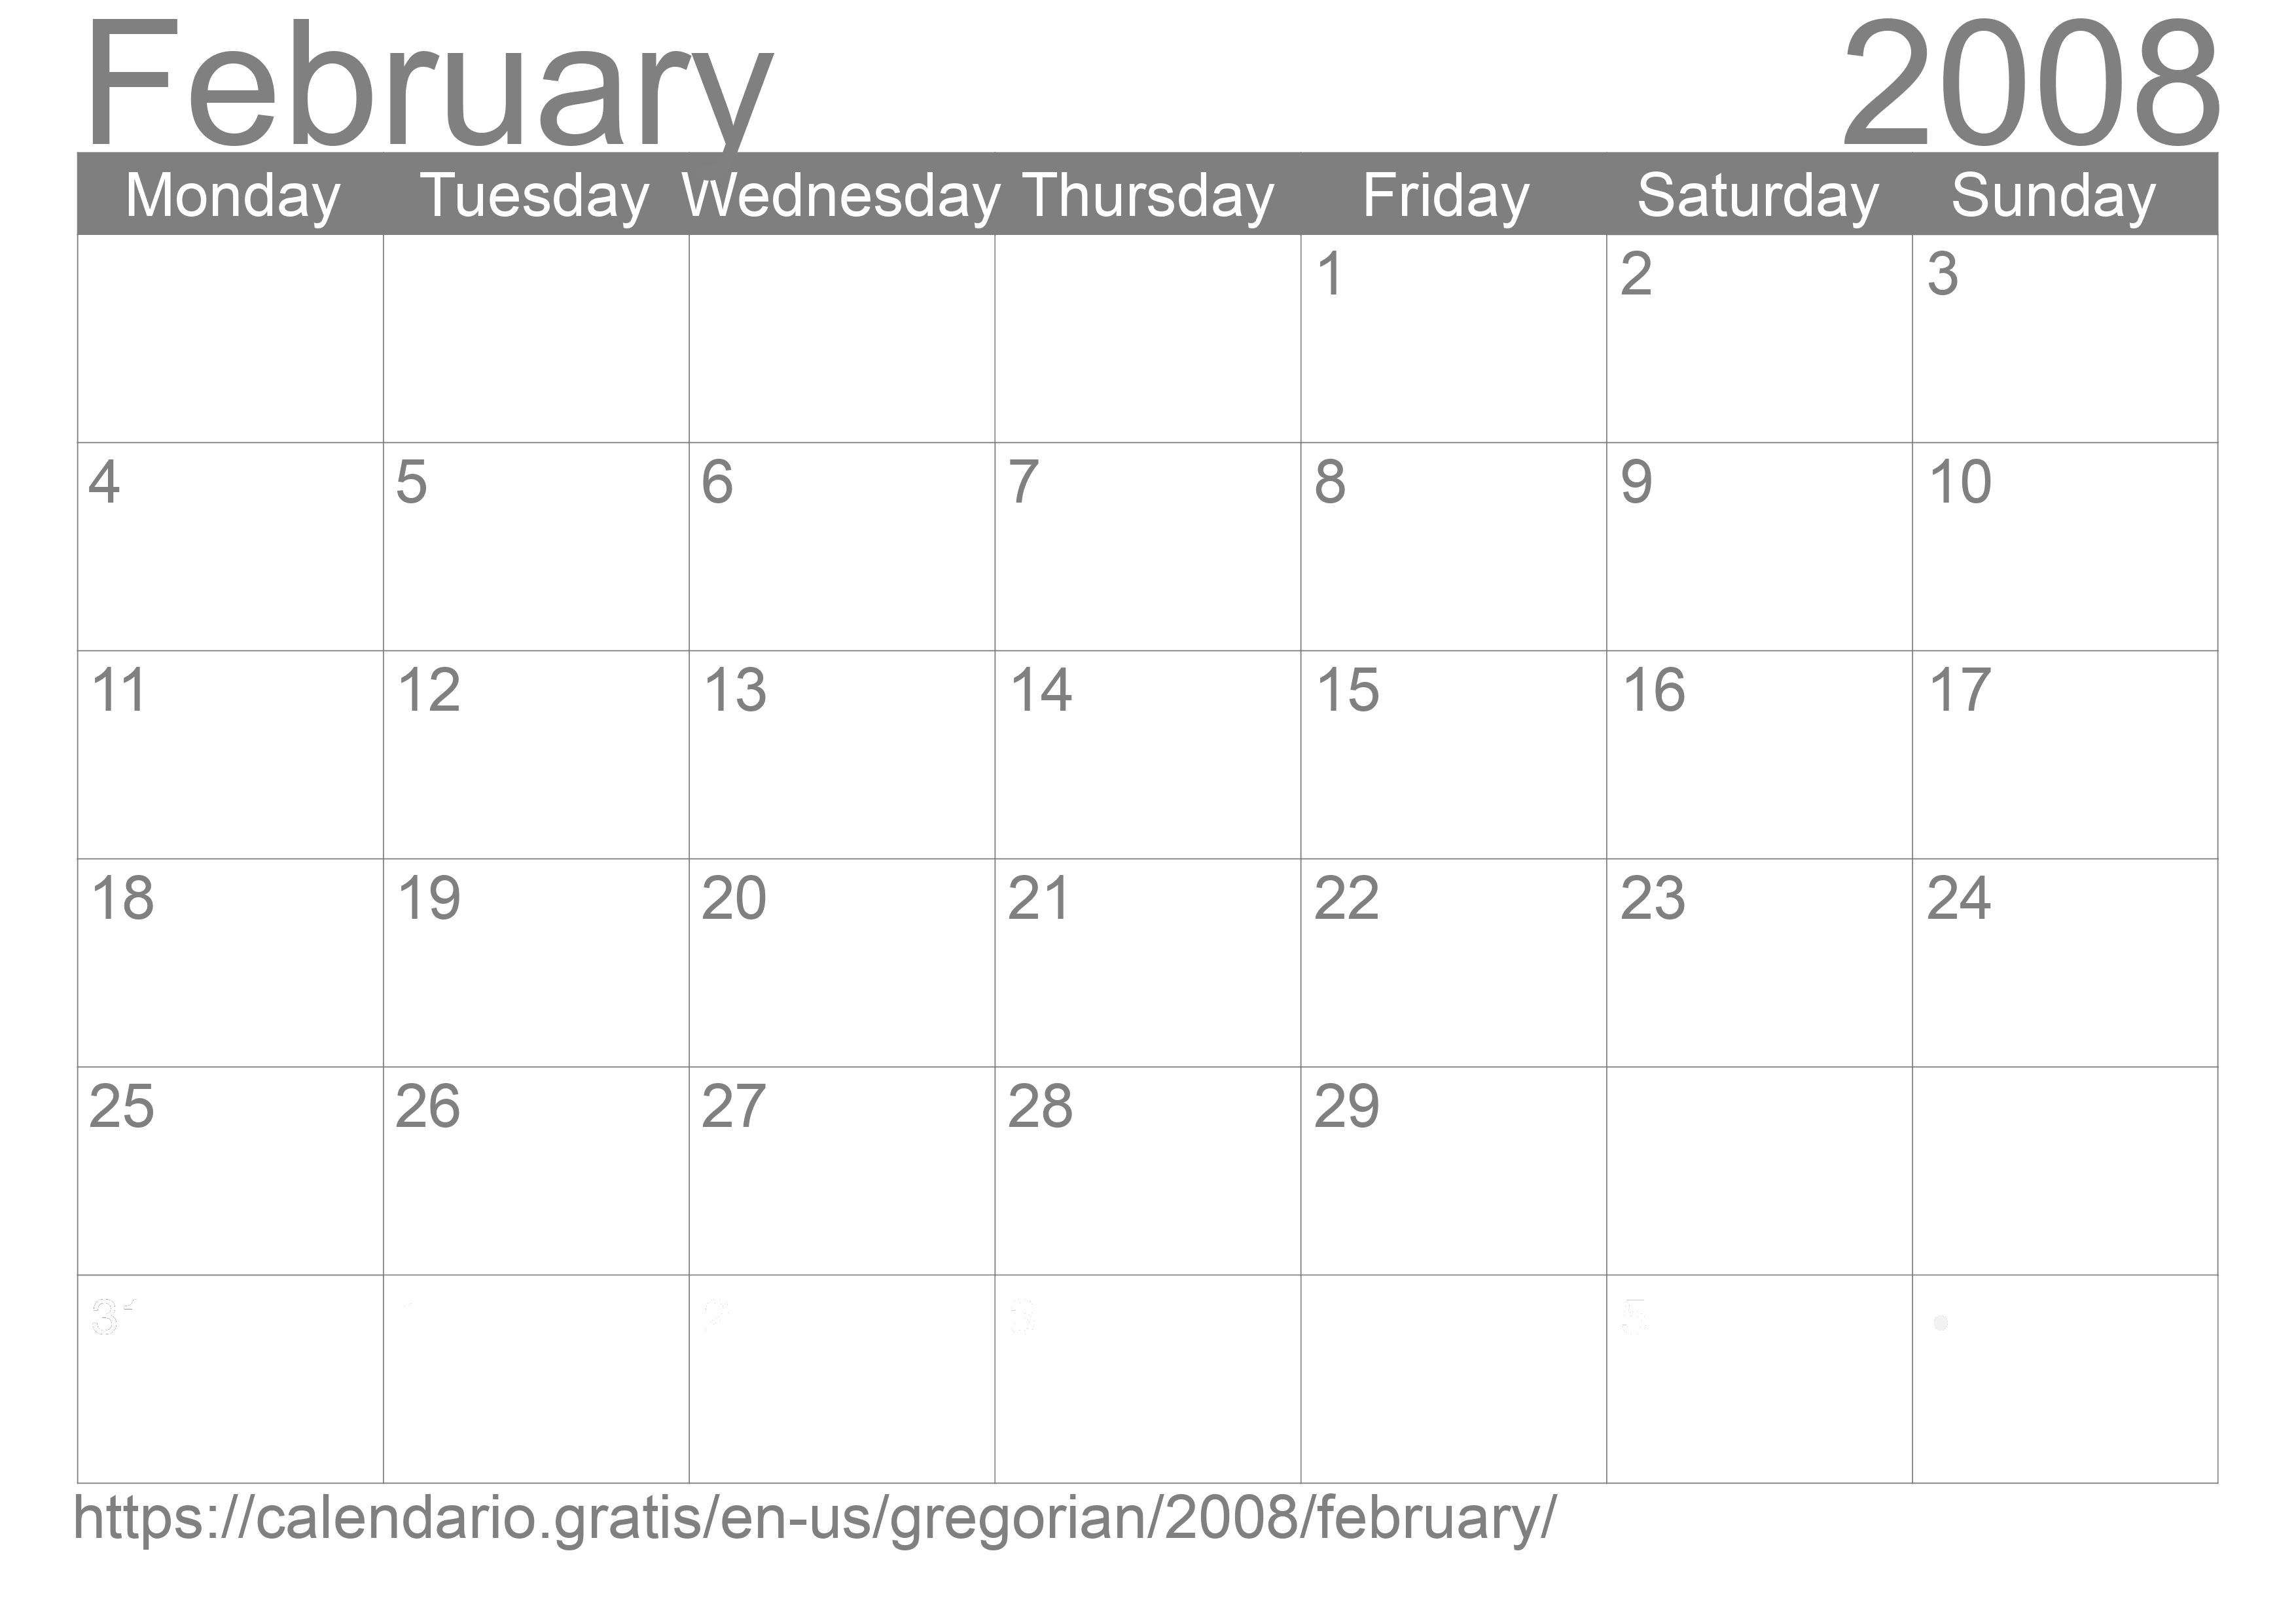 Calendar February 2008 to print